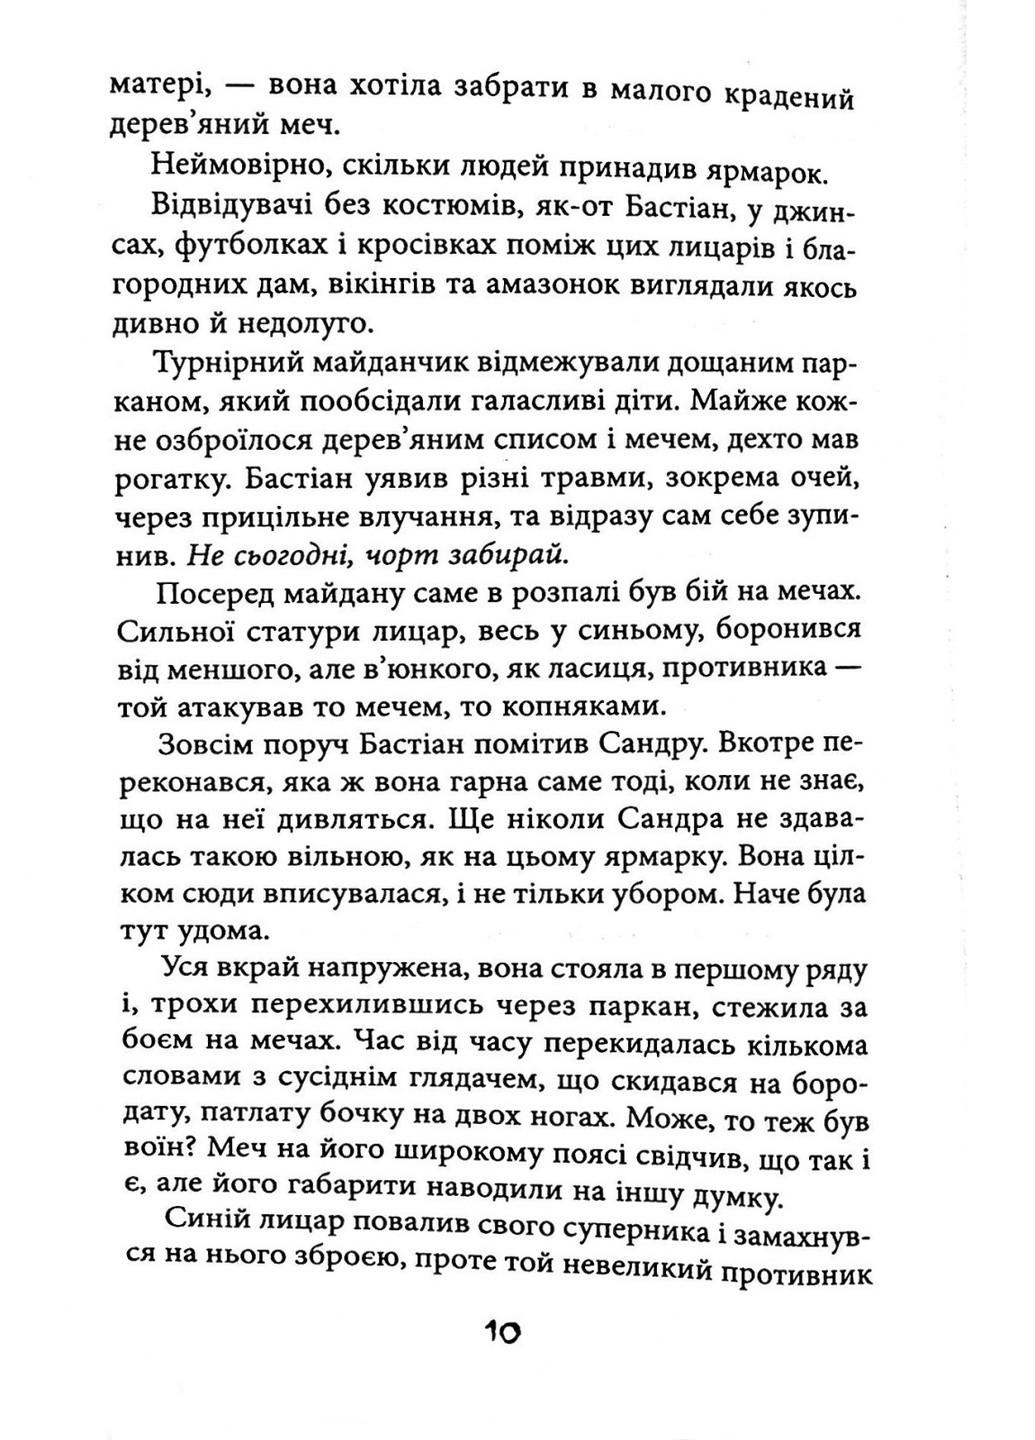 Книга Секулум - Урсула Познанські (9786176642152) Астролябія (258356616)